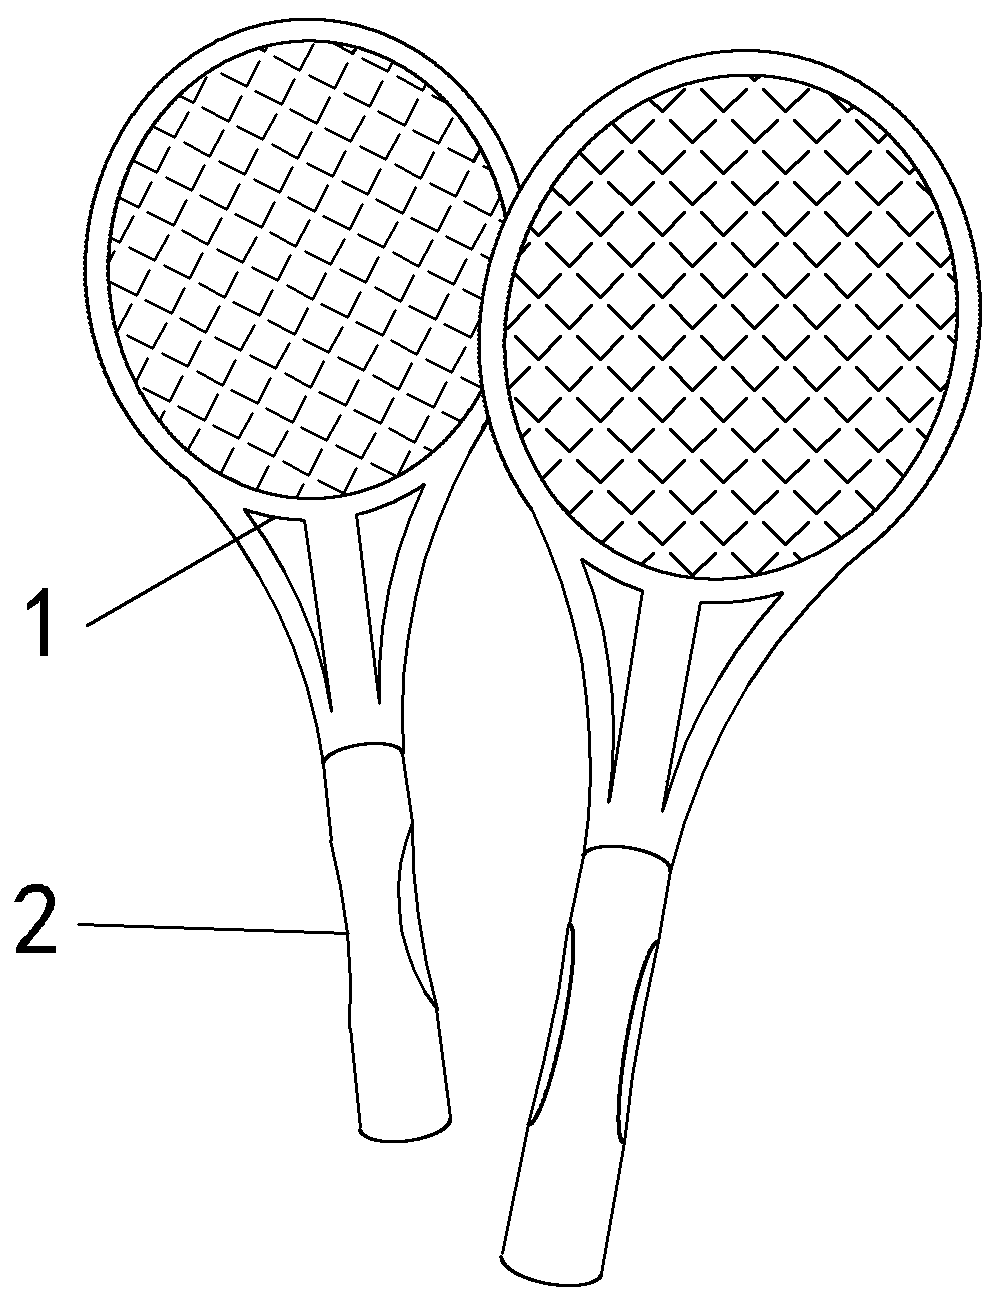 Badminton rackets for children